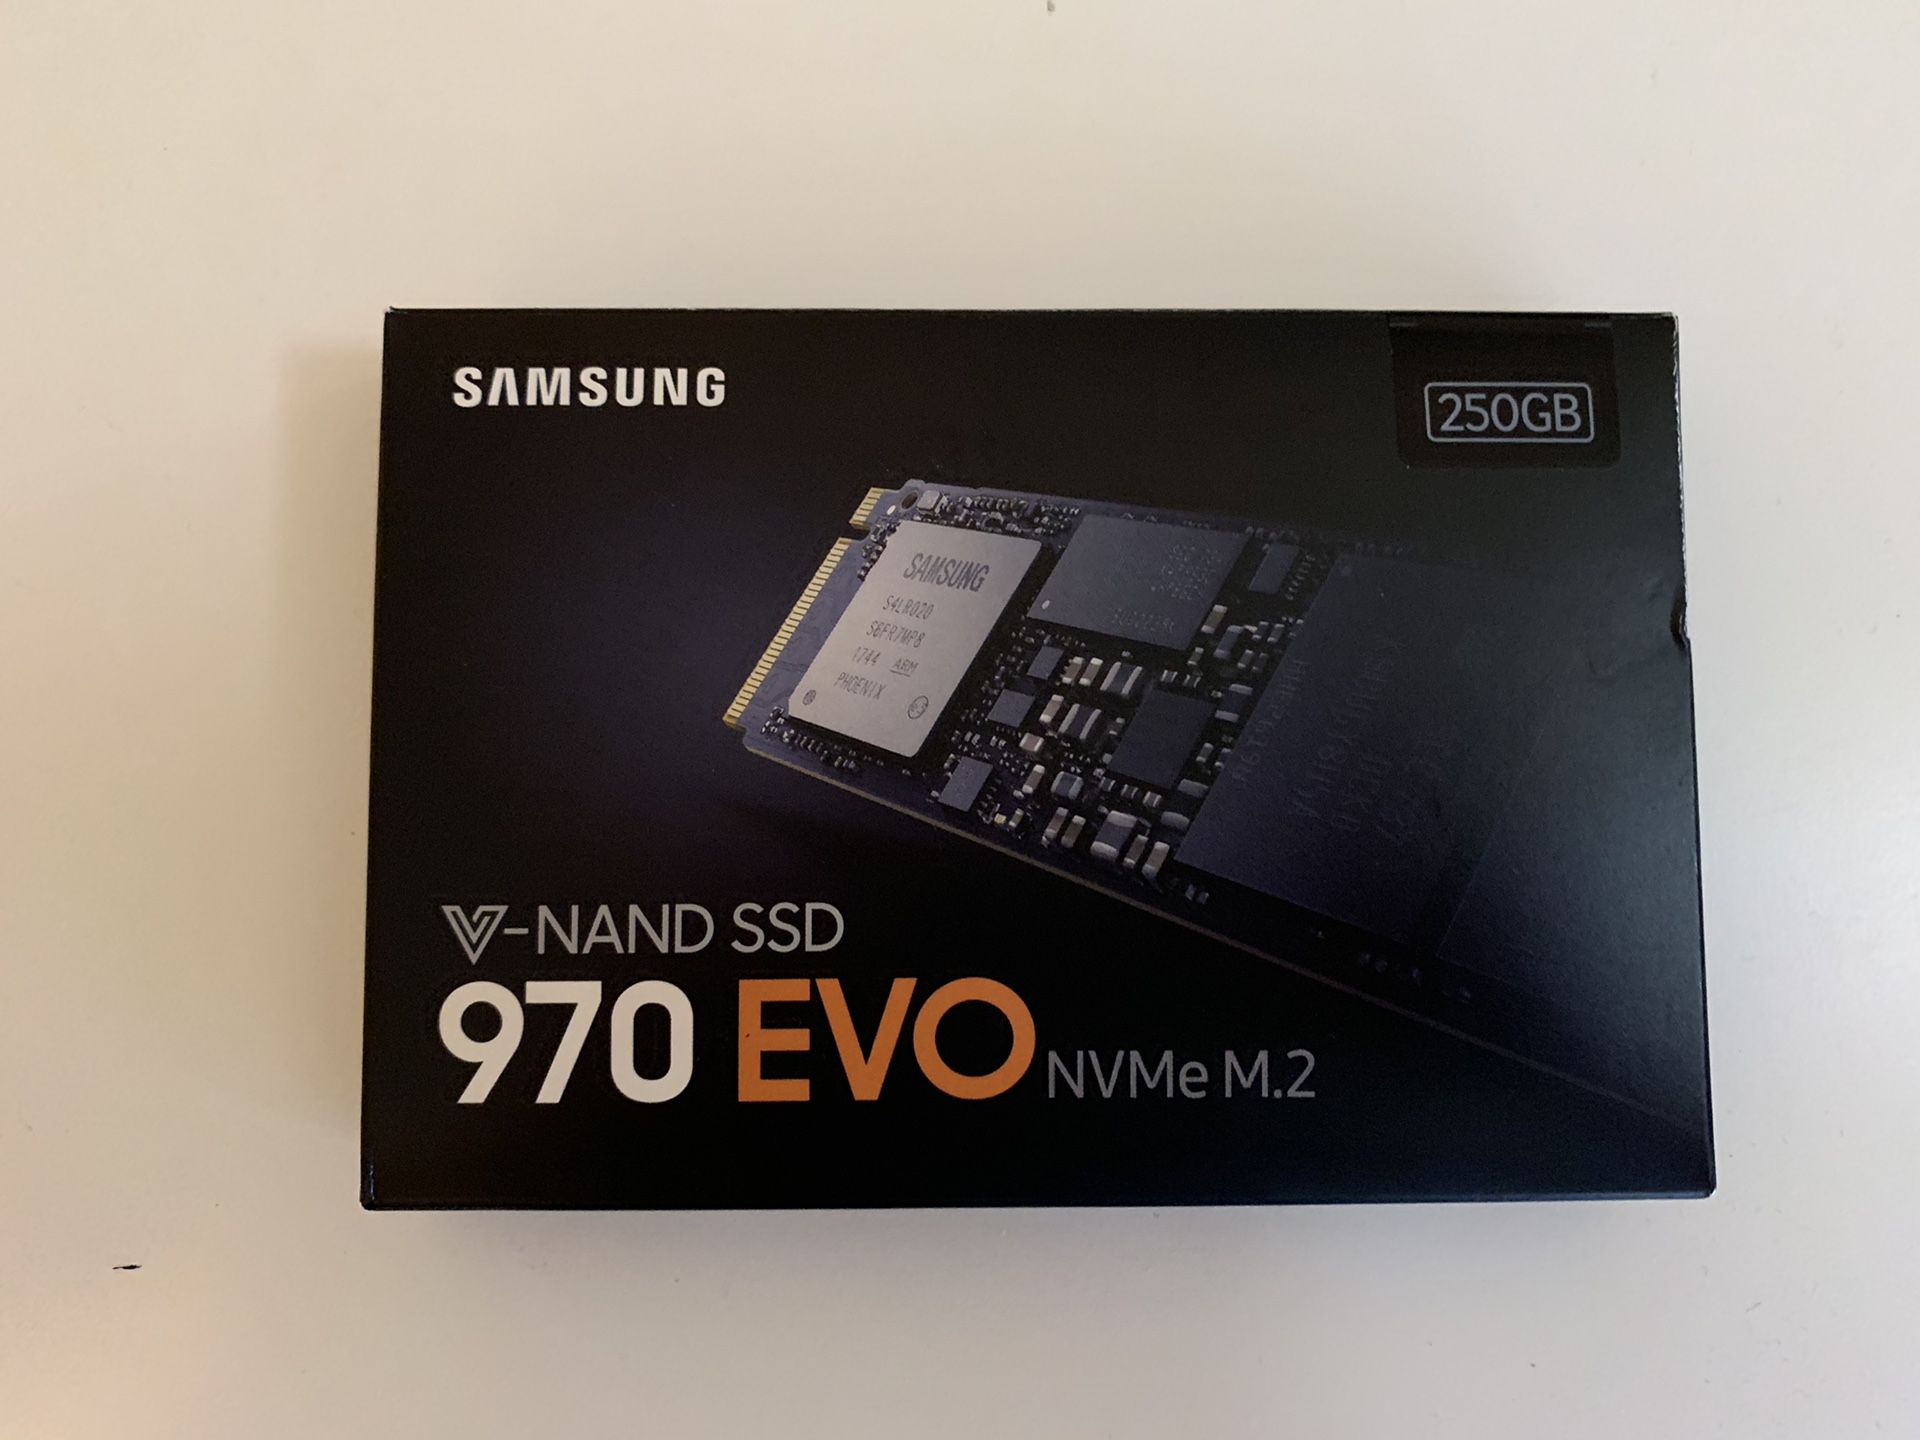 Samsung 970 EVO NVMe M.2 SSD